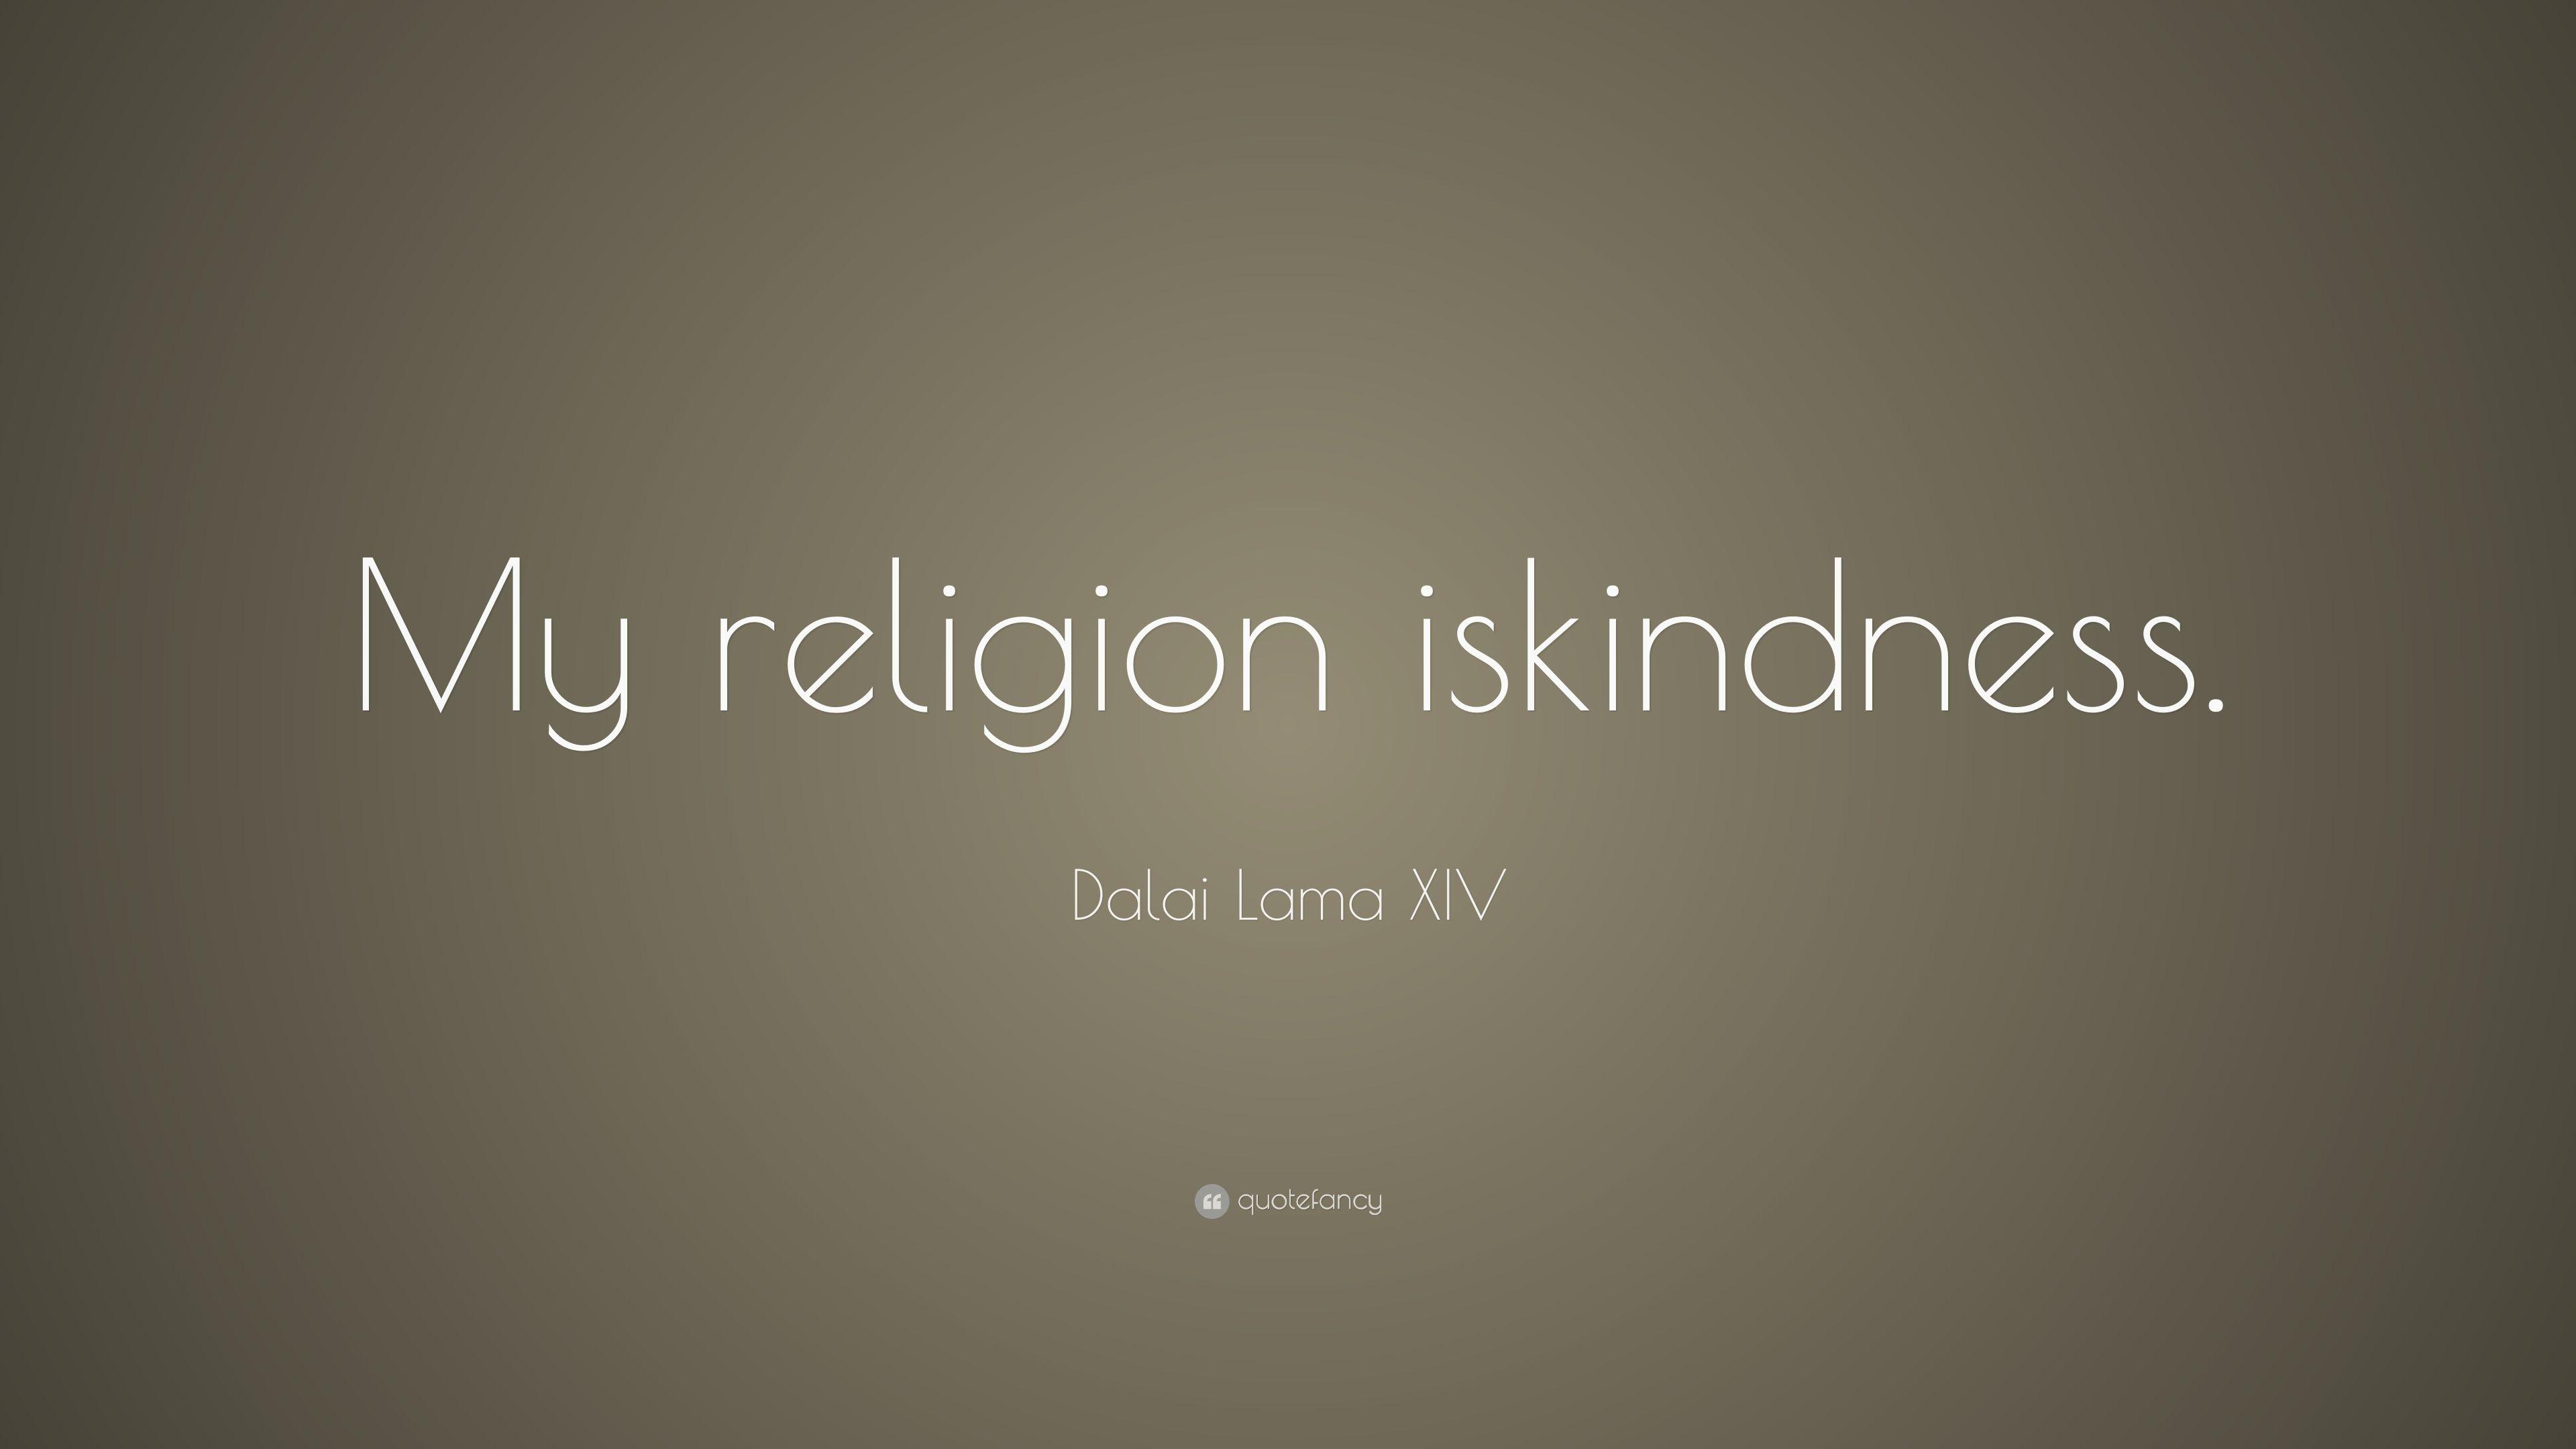 Dalai Lama XIV Quote: “My religion is kindness.” 15 wallpaper